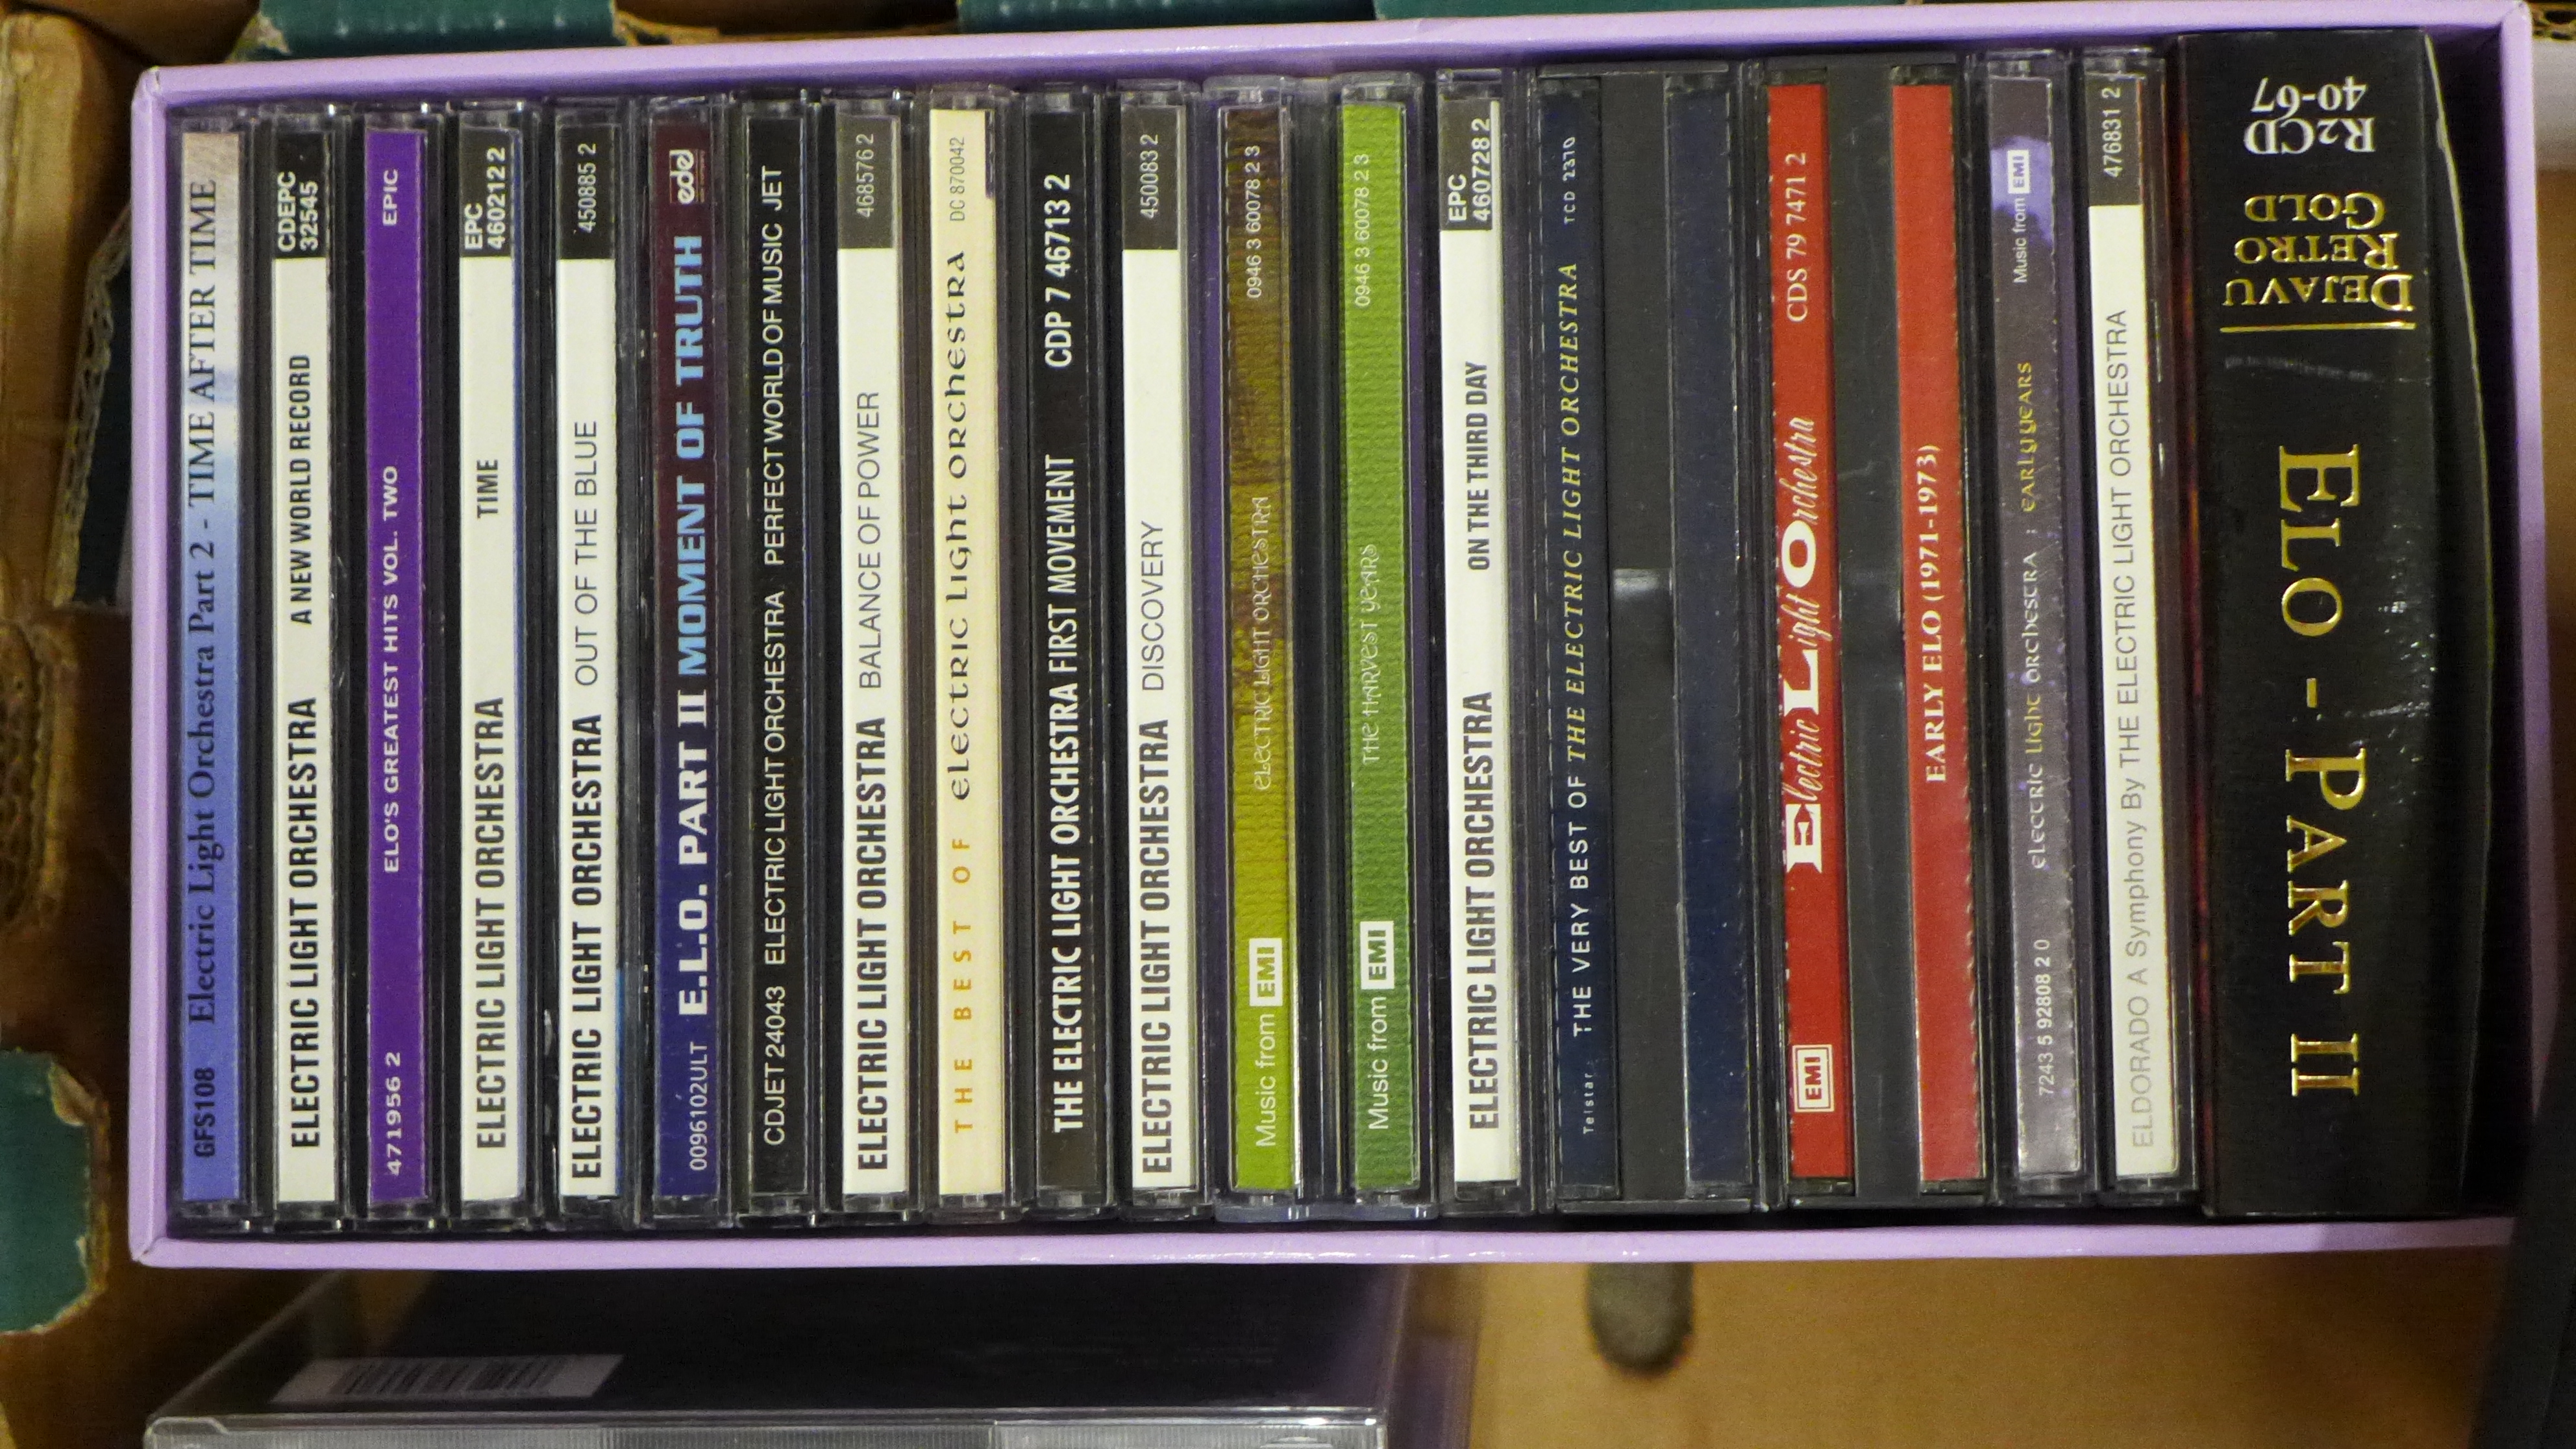 ELO CDs, mixed LP records including Bryan Ferry, Dire Straits, UB40, Moody Blues, Queen, plus - Bild 2 aus 4